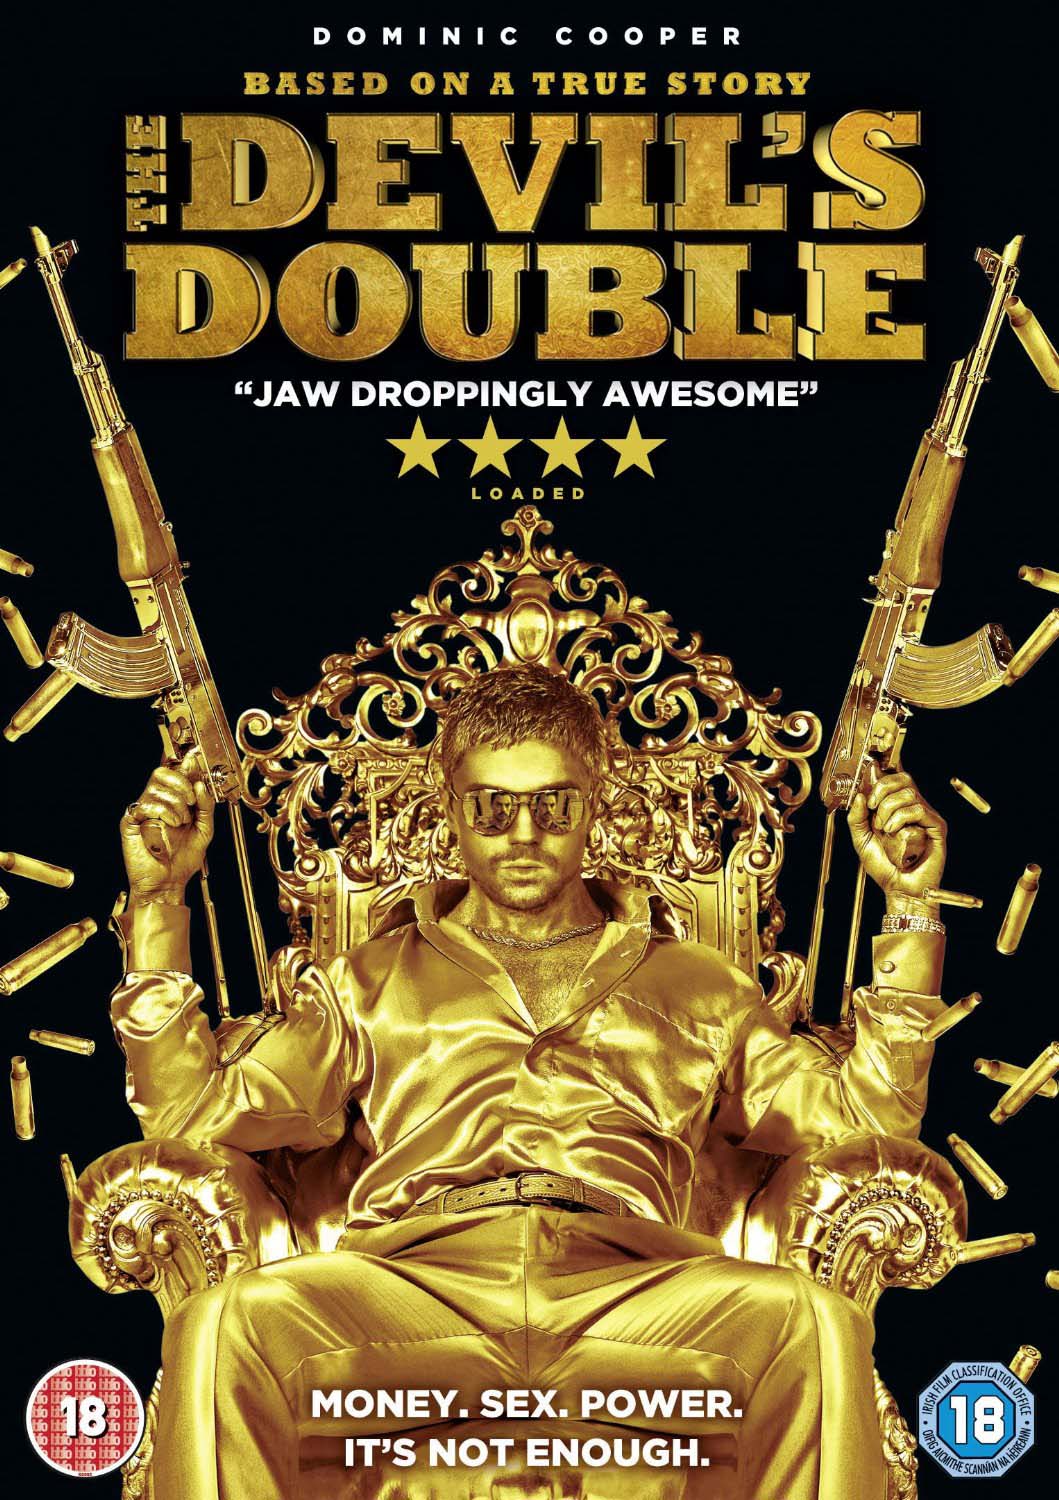 The Devils Double Full Documentary